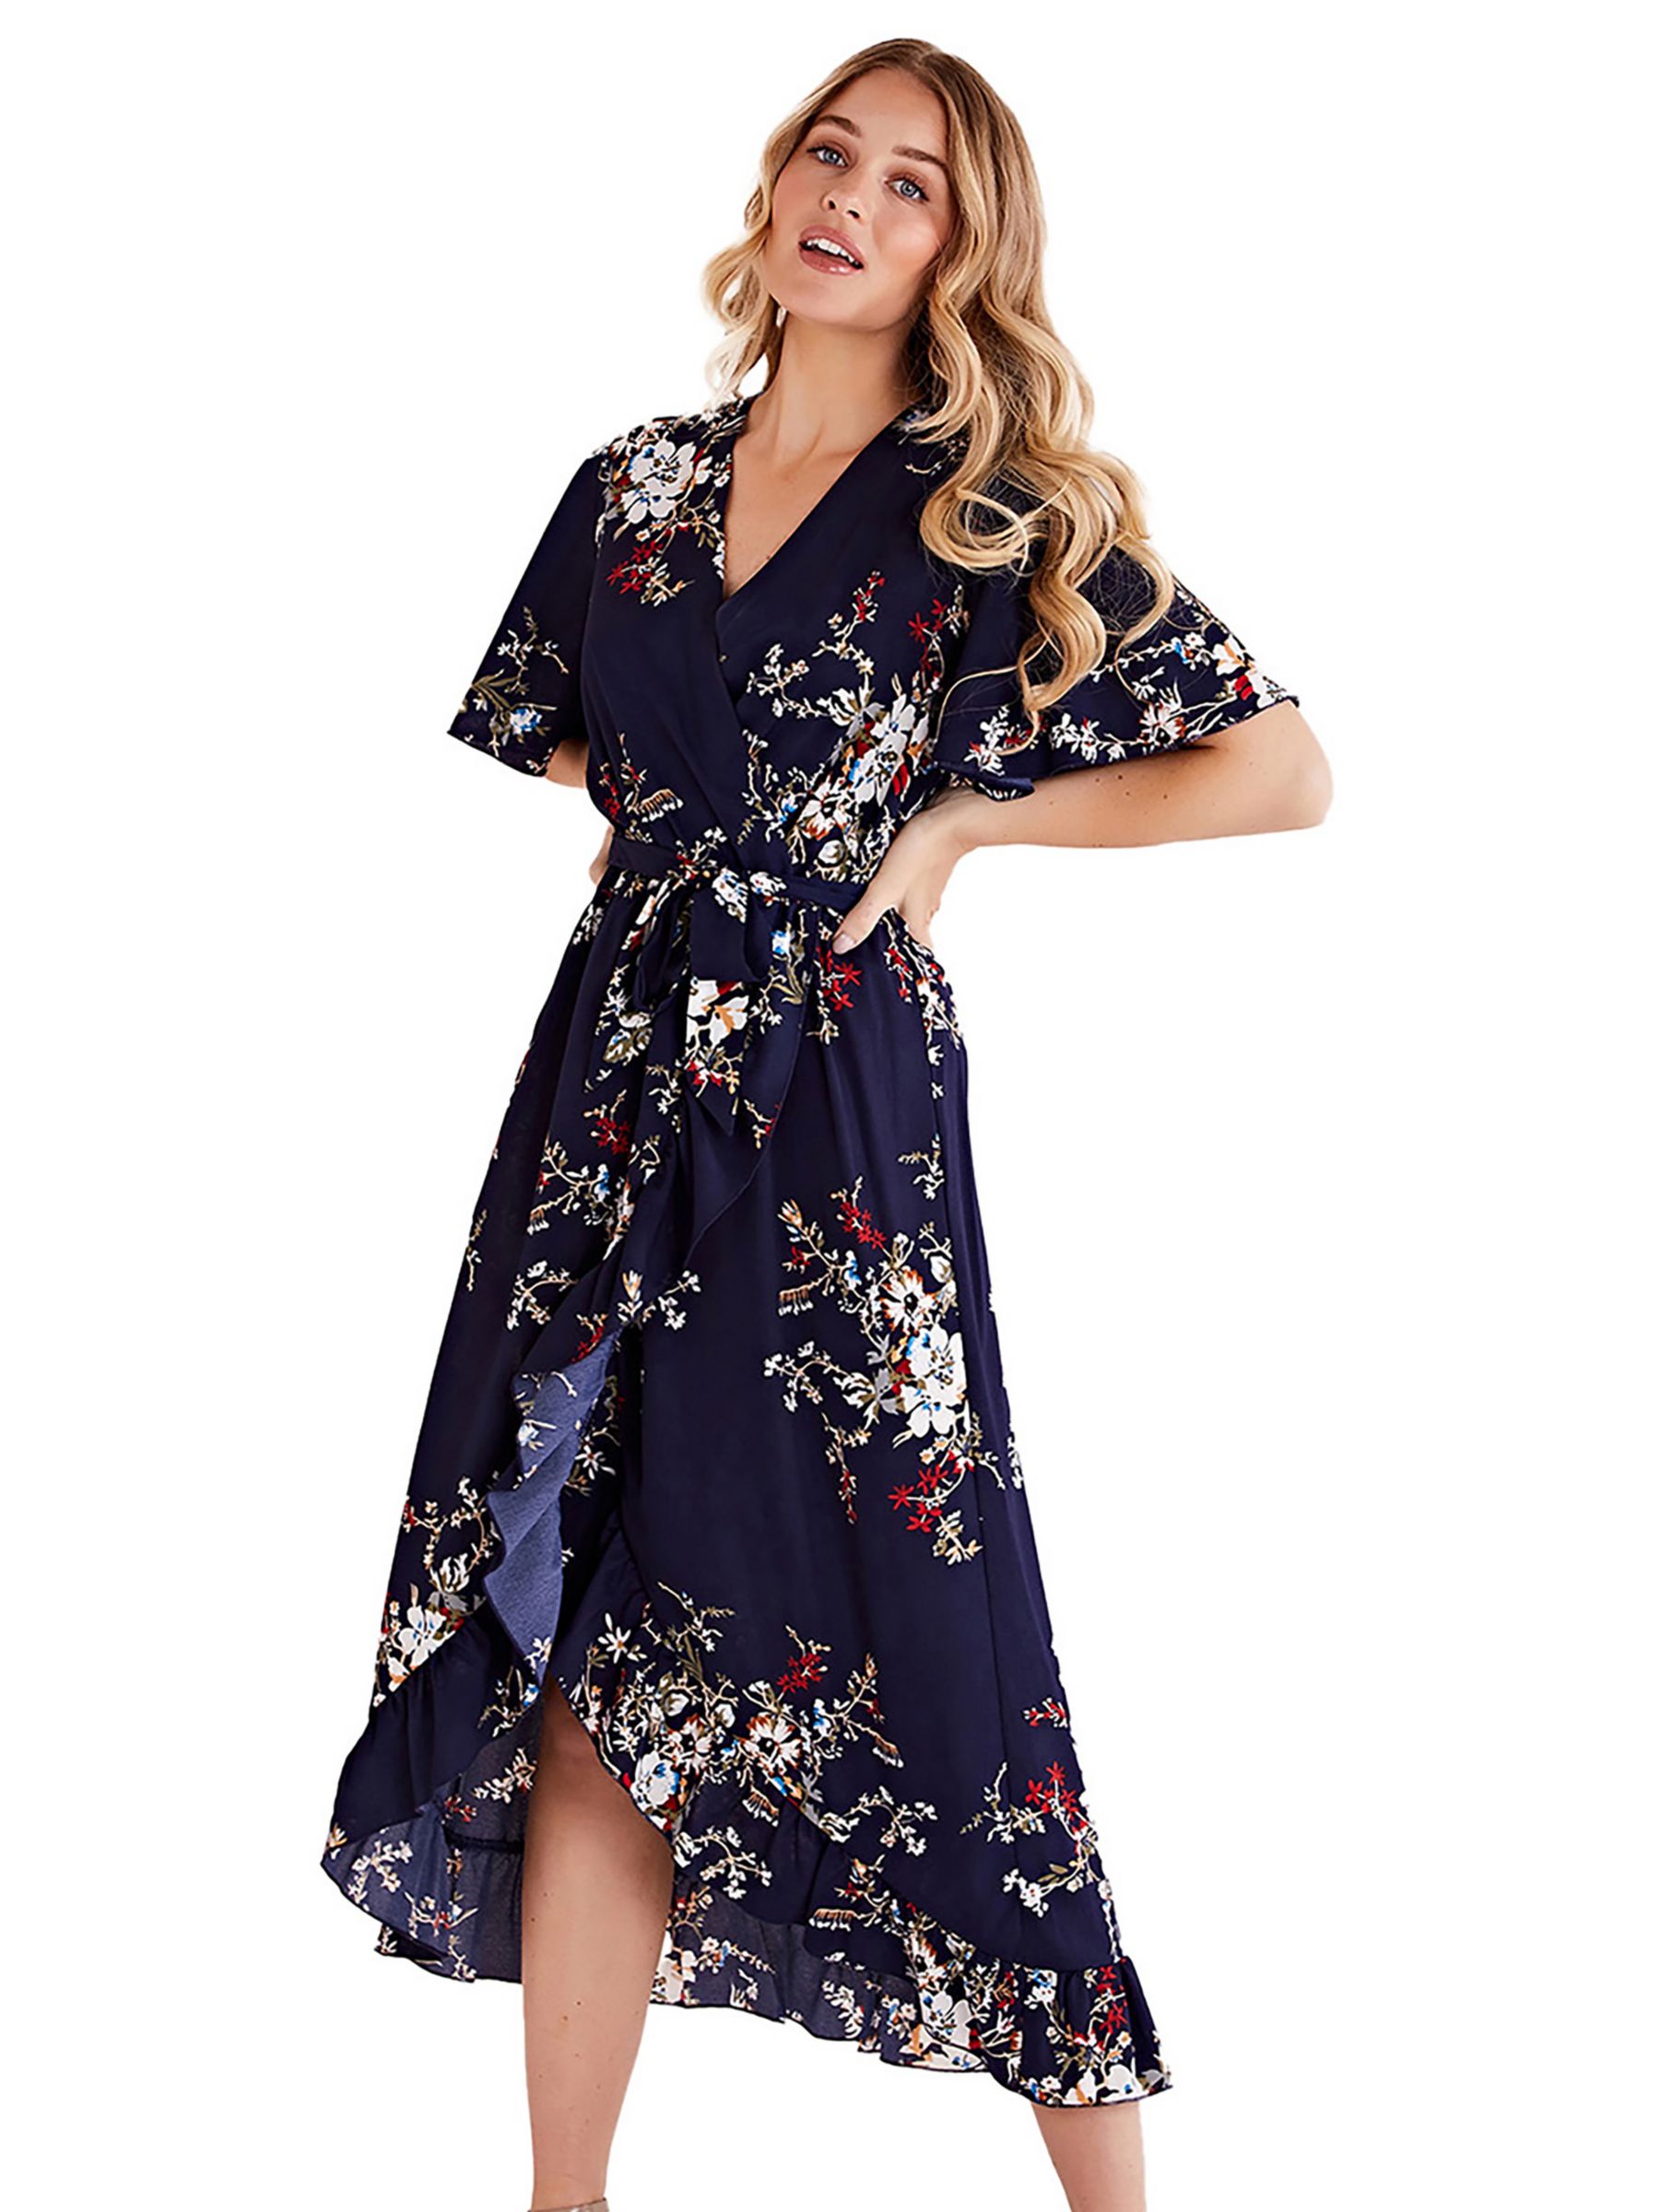 Mela London Floral Short Sleeve Frill Maxi Dress, Navy/Multi, 8